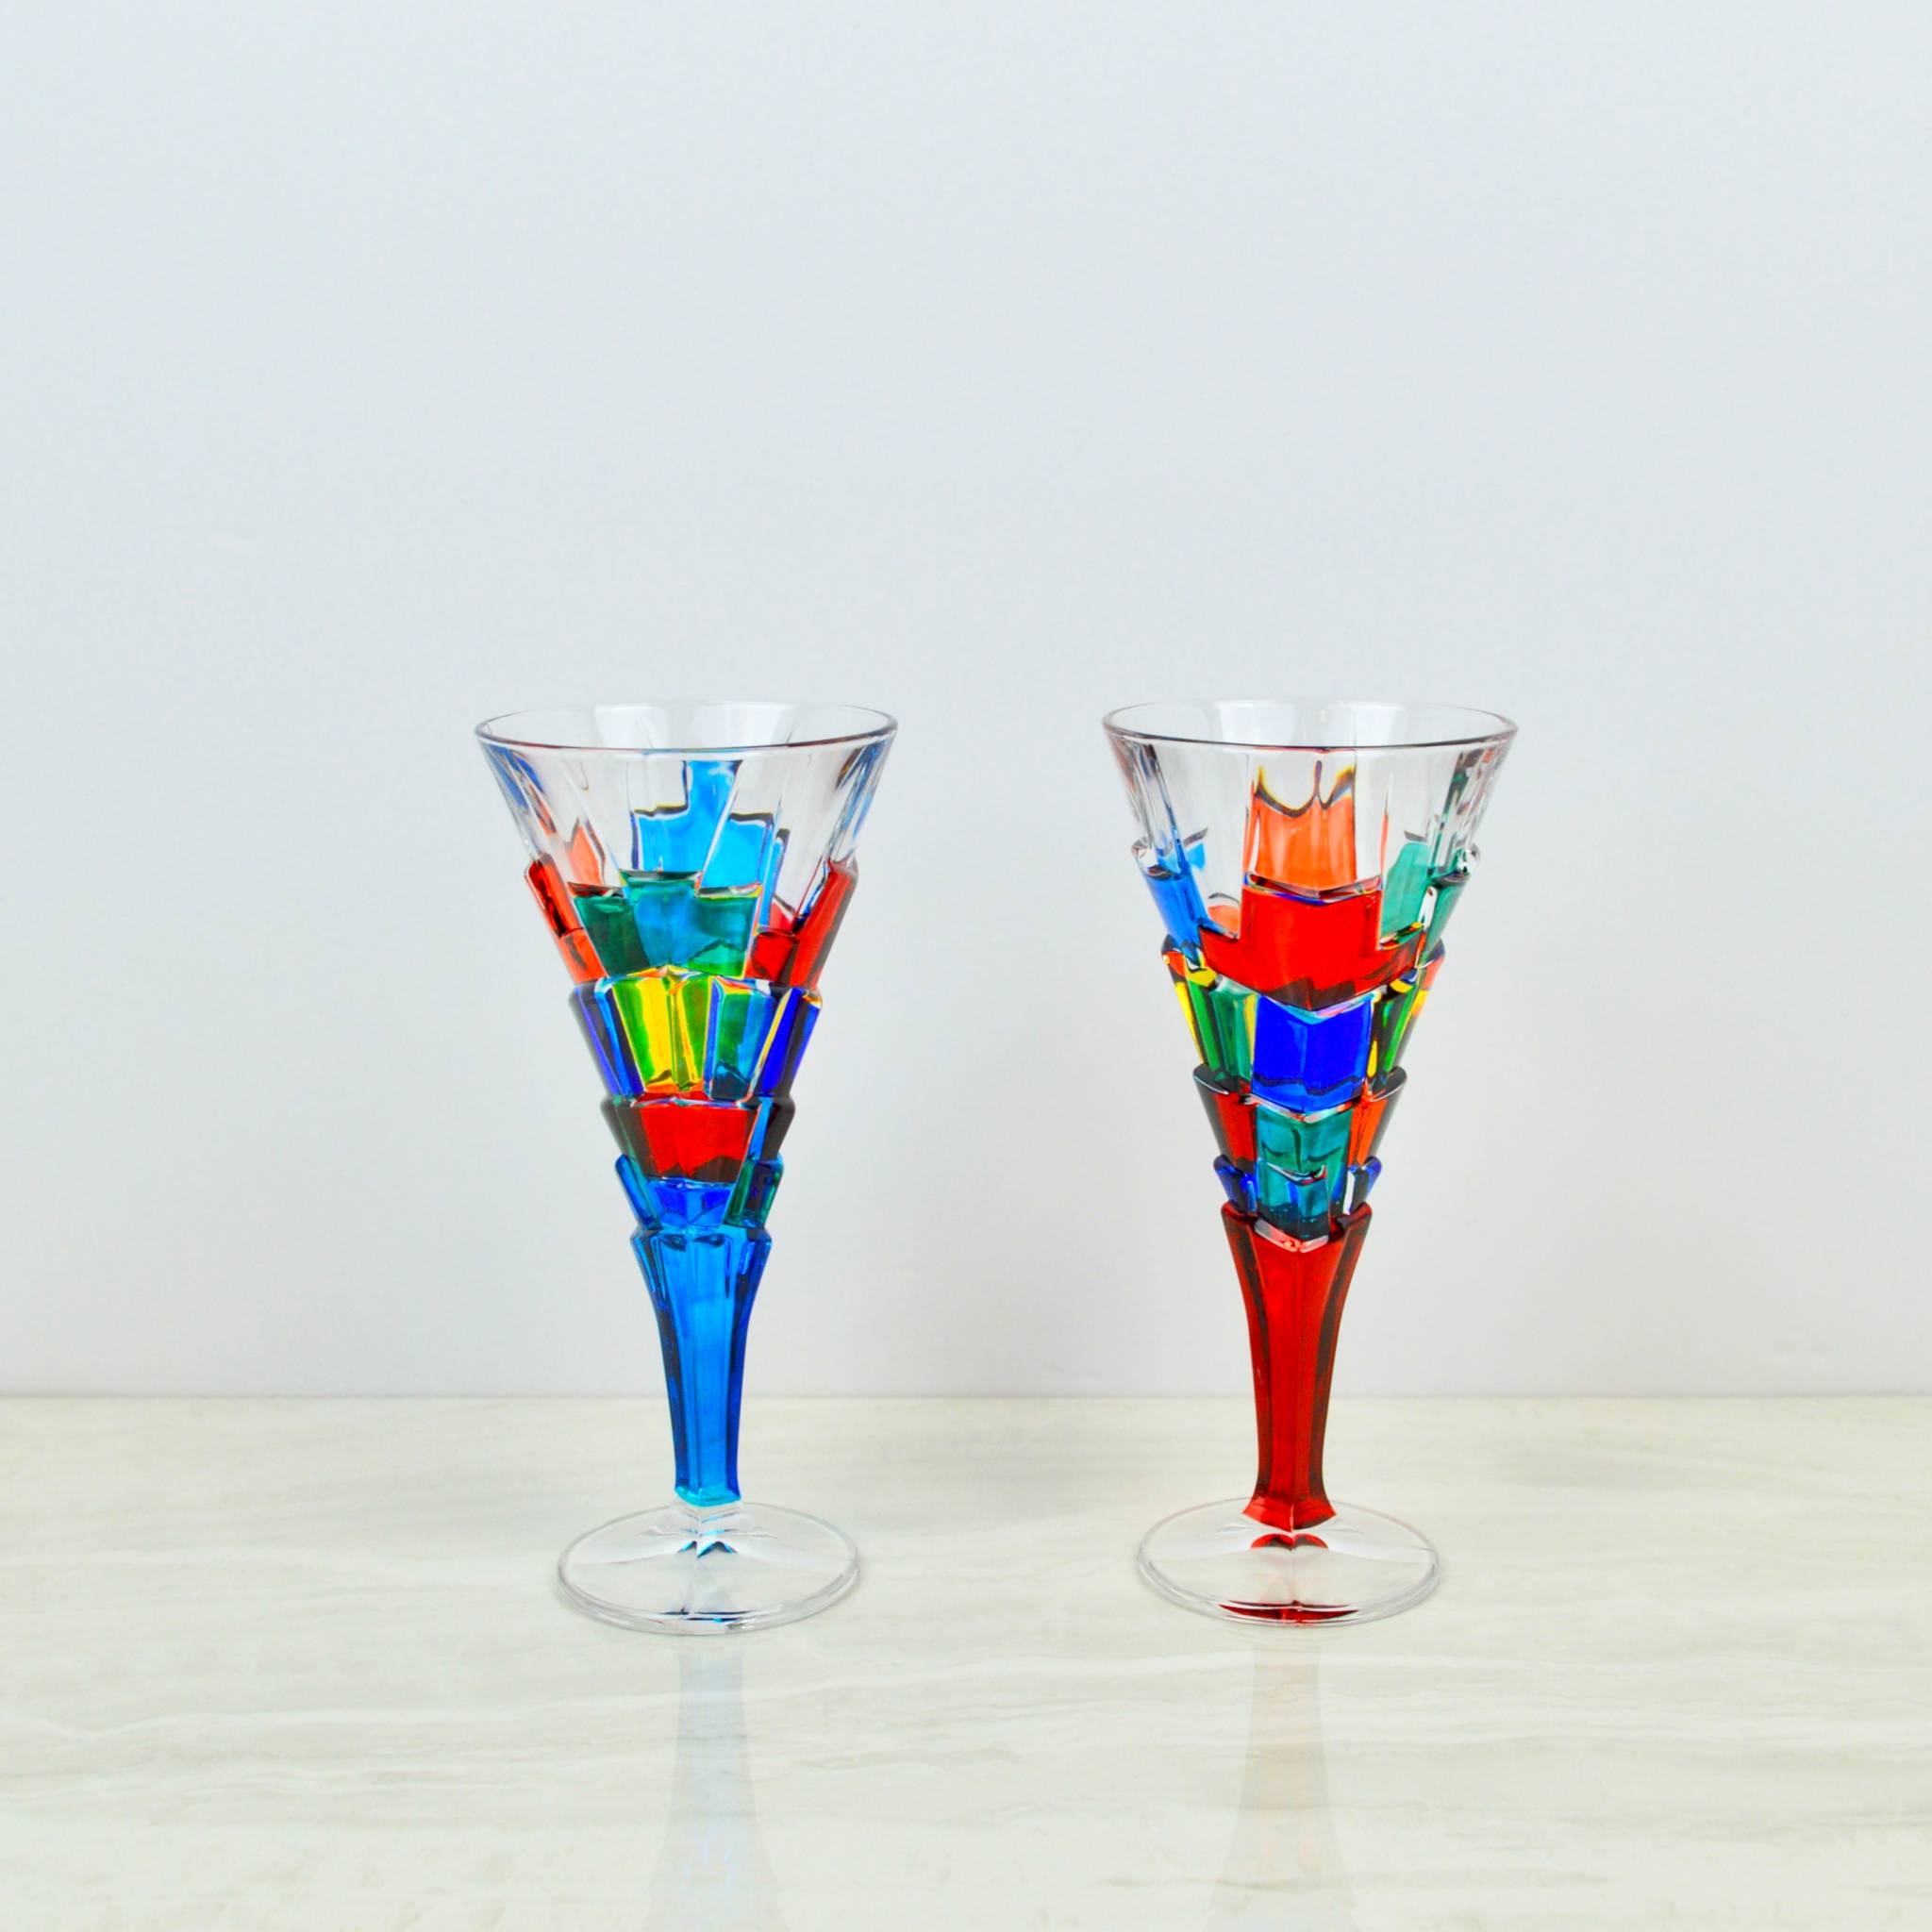 Murano Stained Art Wine Glasses - Set of 2